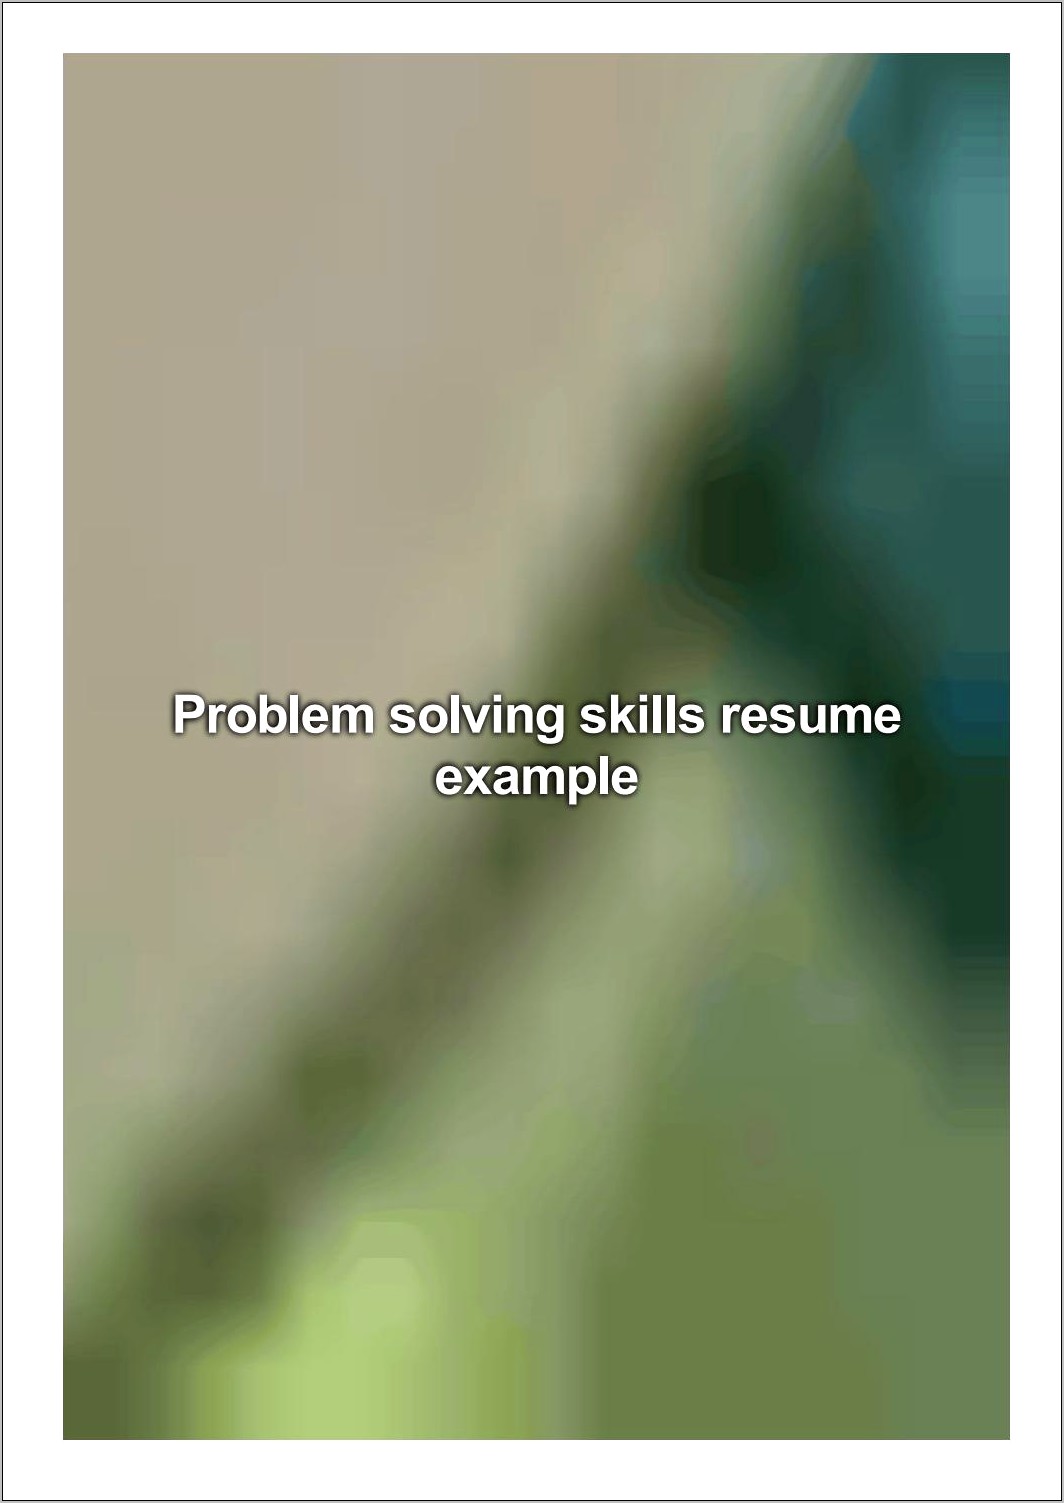 Describe Problem Solving Skills Resume